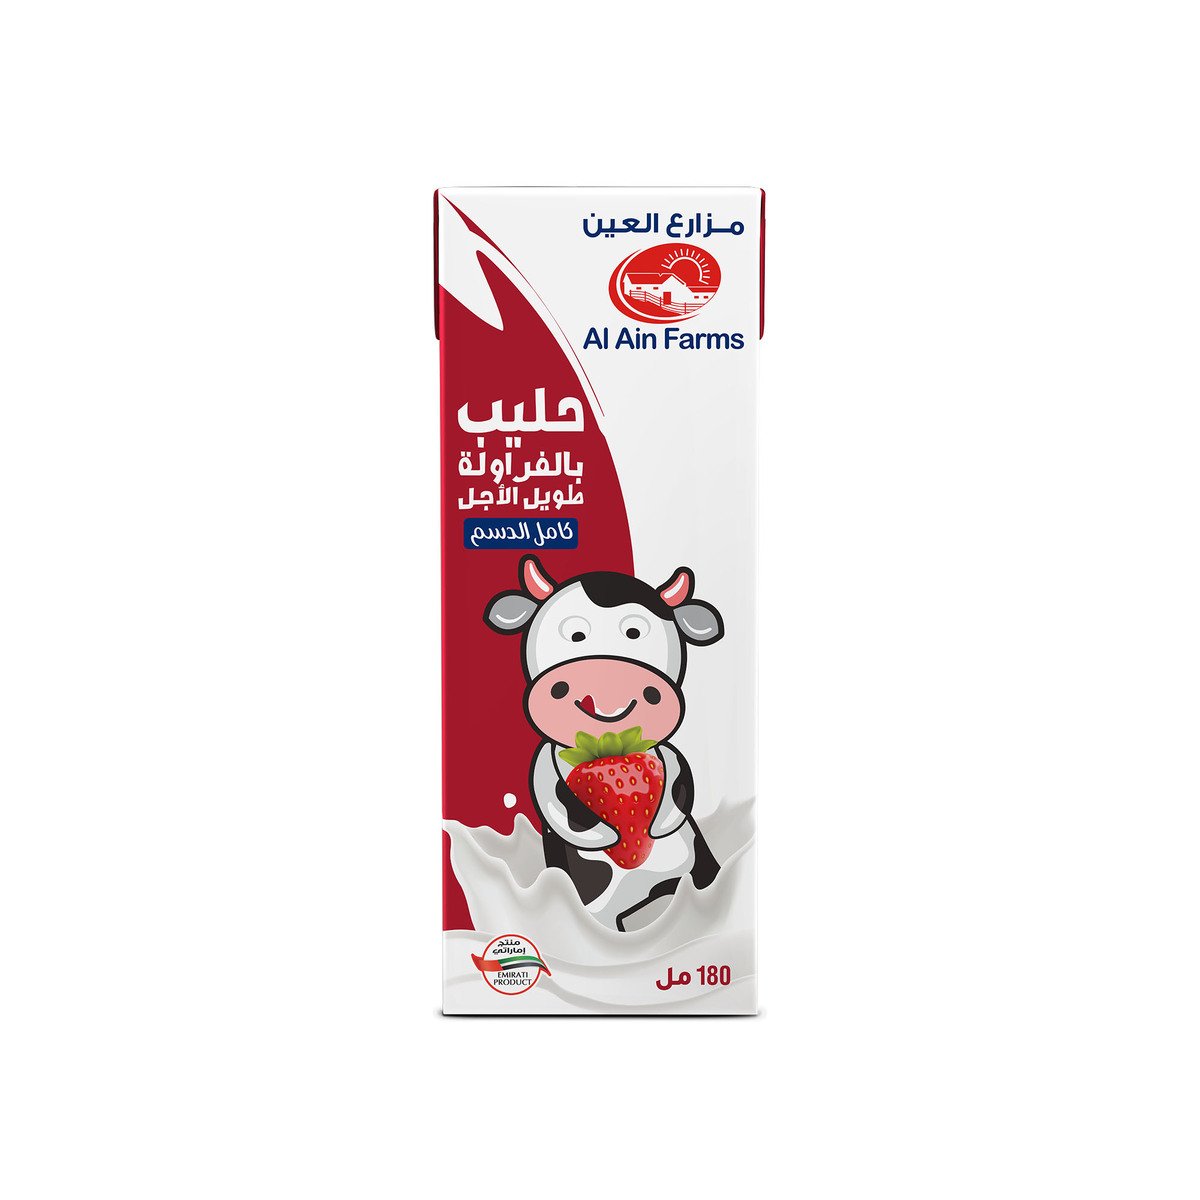 Al Ain Long Life Strawberry Milk Drink 18 x 180ml